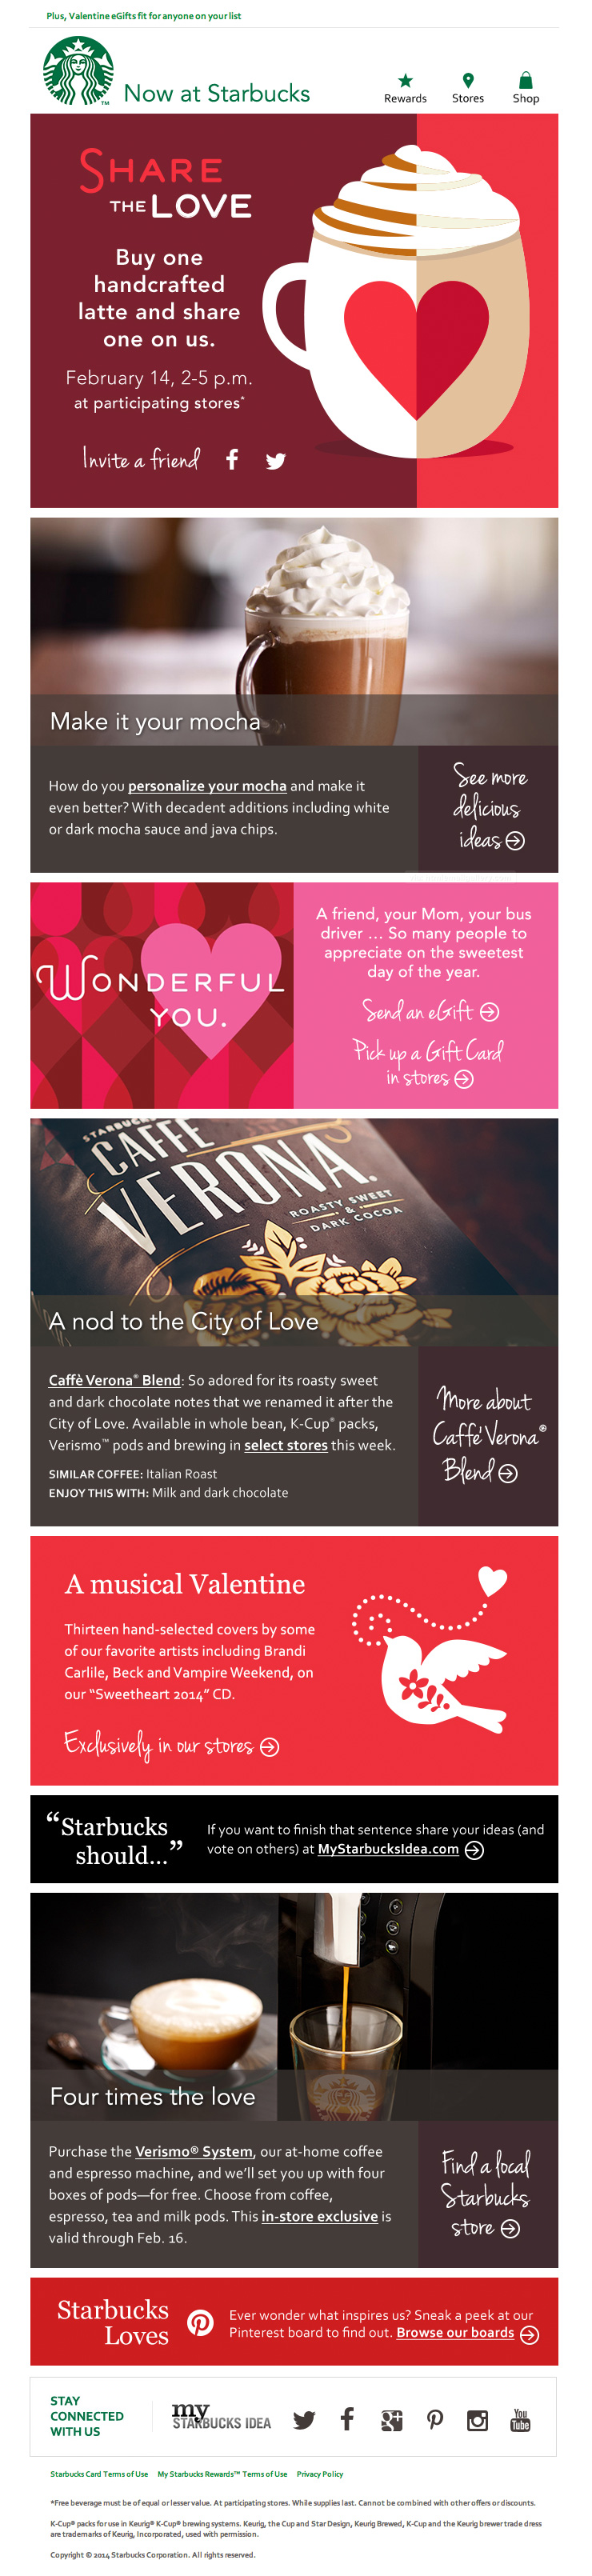 Starbucks Valentines Heart email